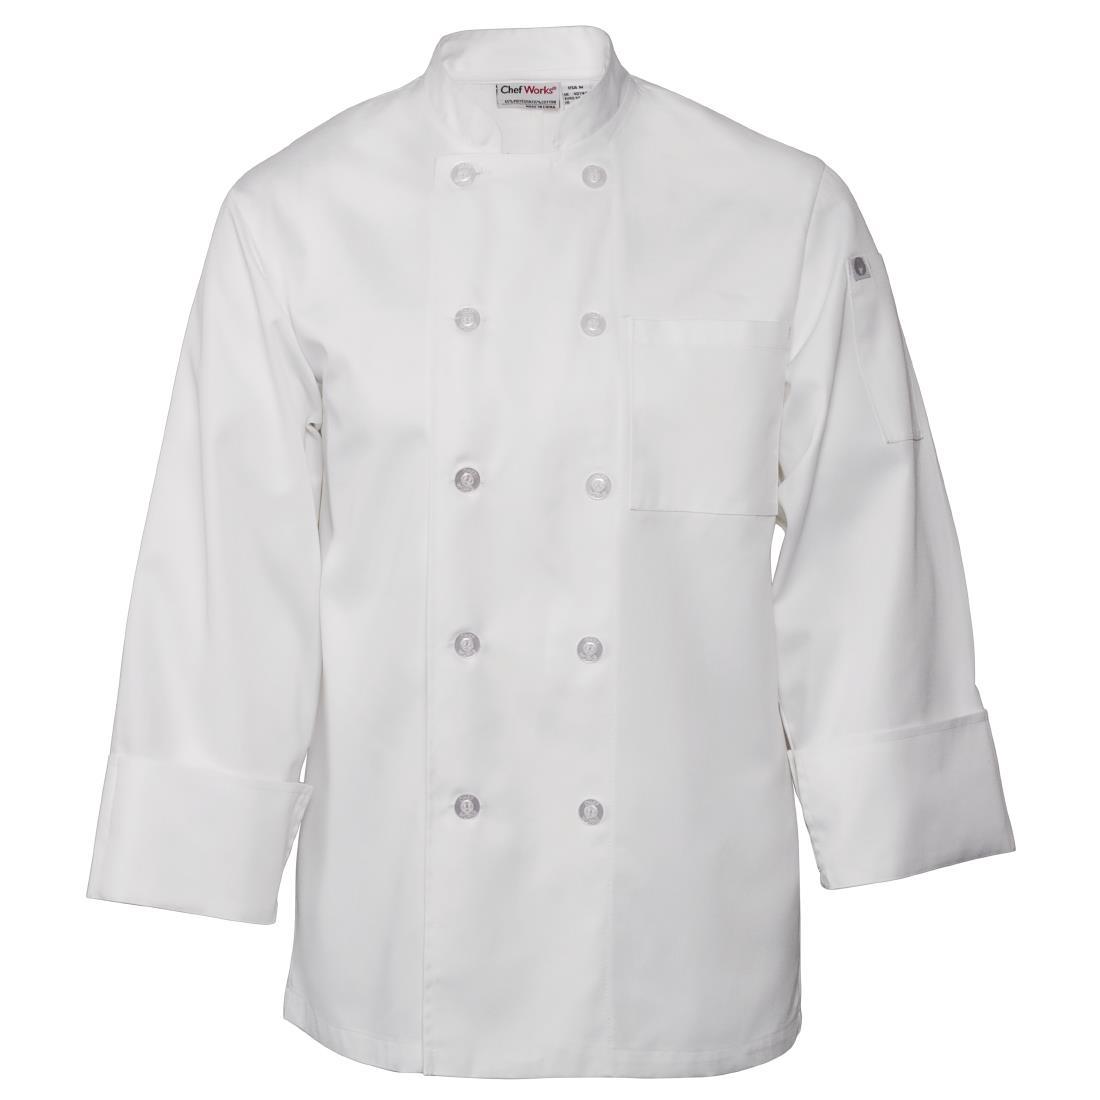 Chef Works Unisex Le Mans Chefs Jacket White XL - A371-XL  - 2